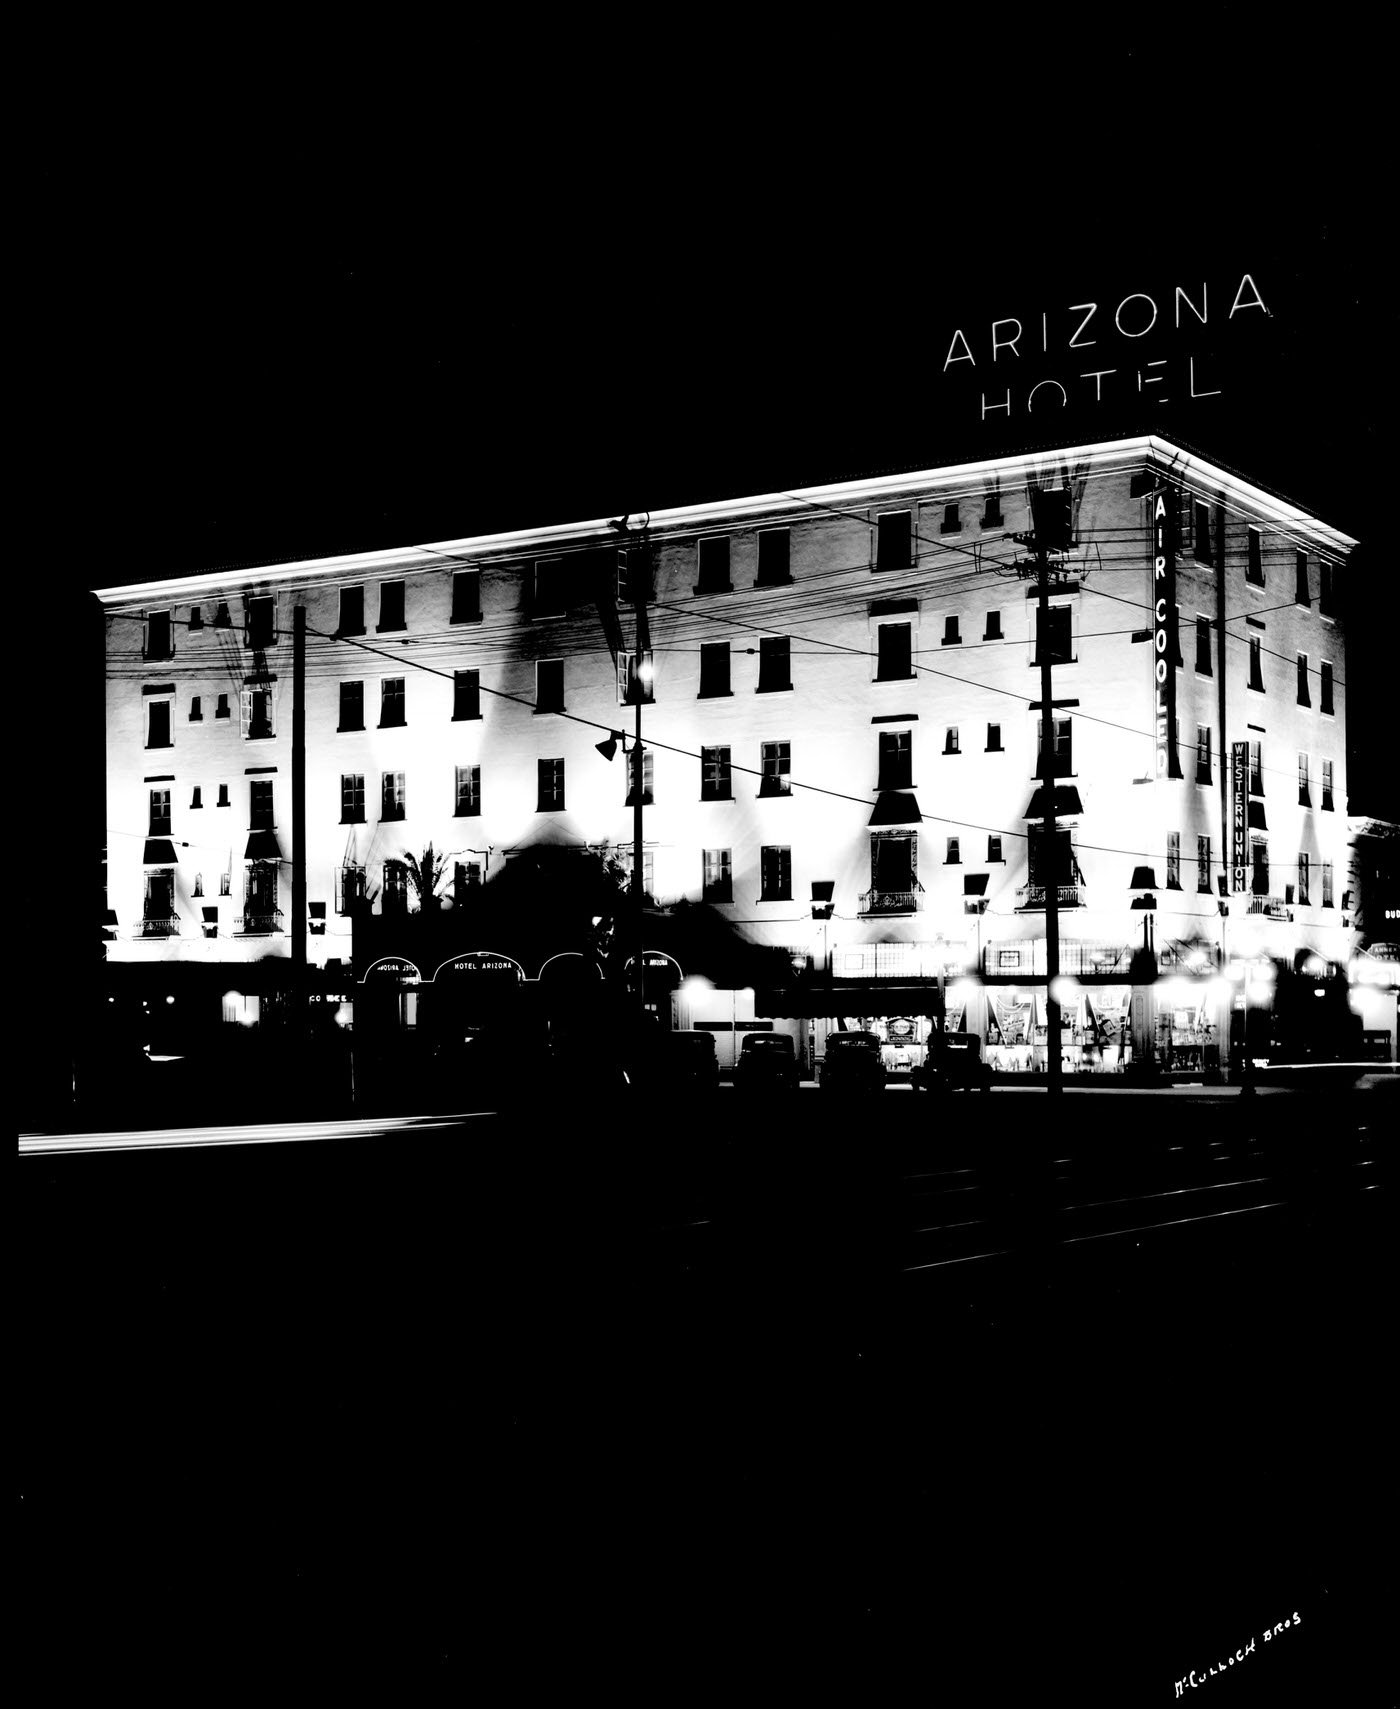 Arizona Hotel at Night, 1930s